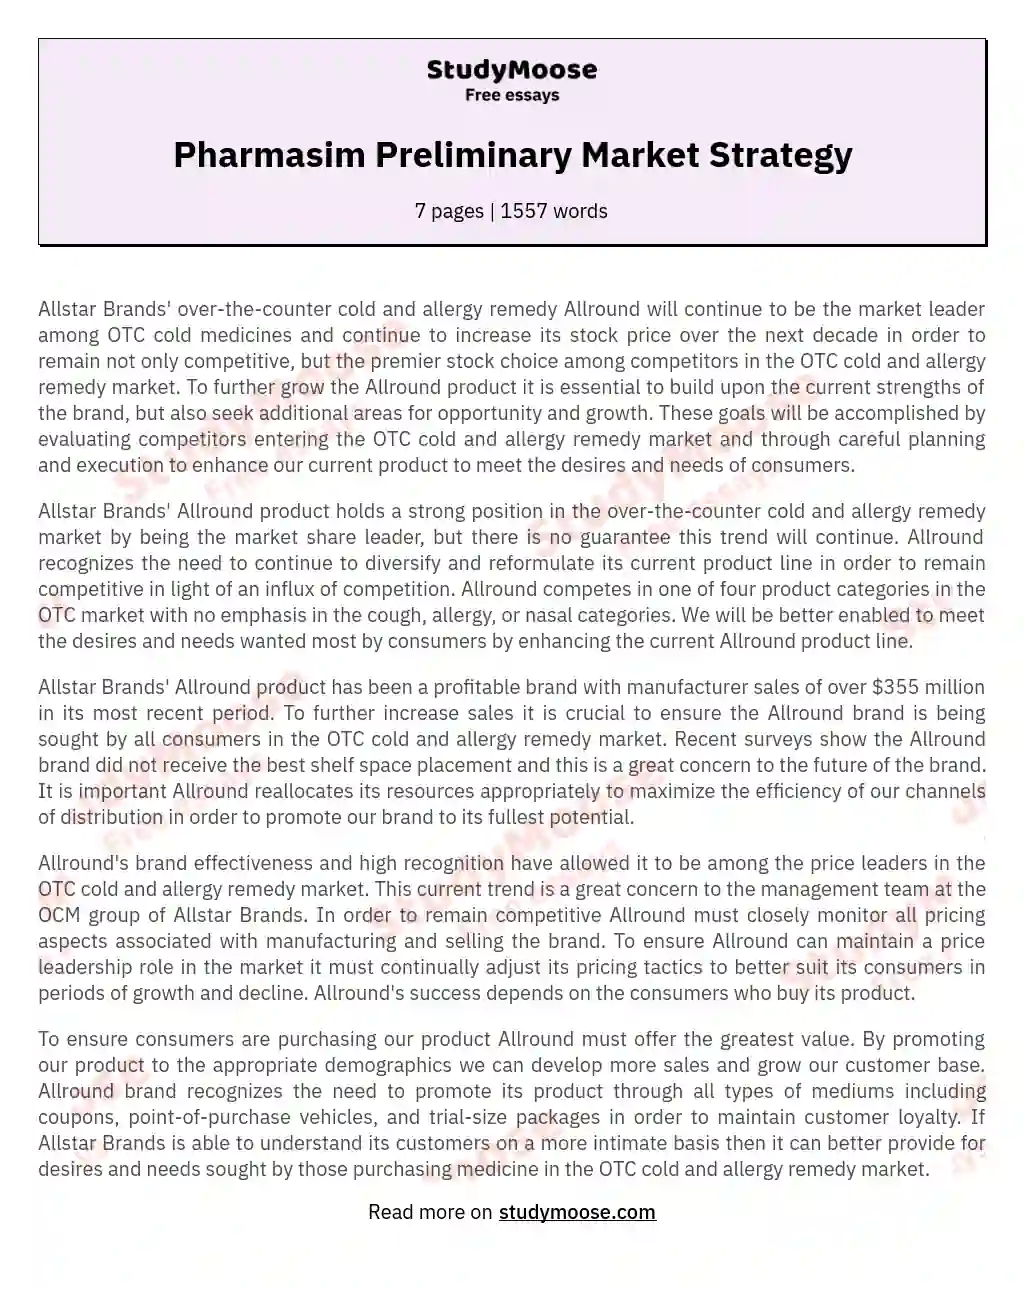 Pharmasim Preliminary Market Strategy essay